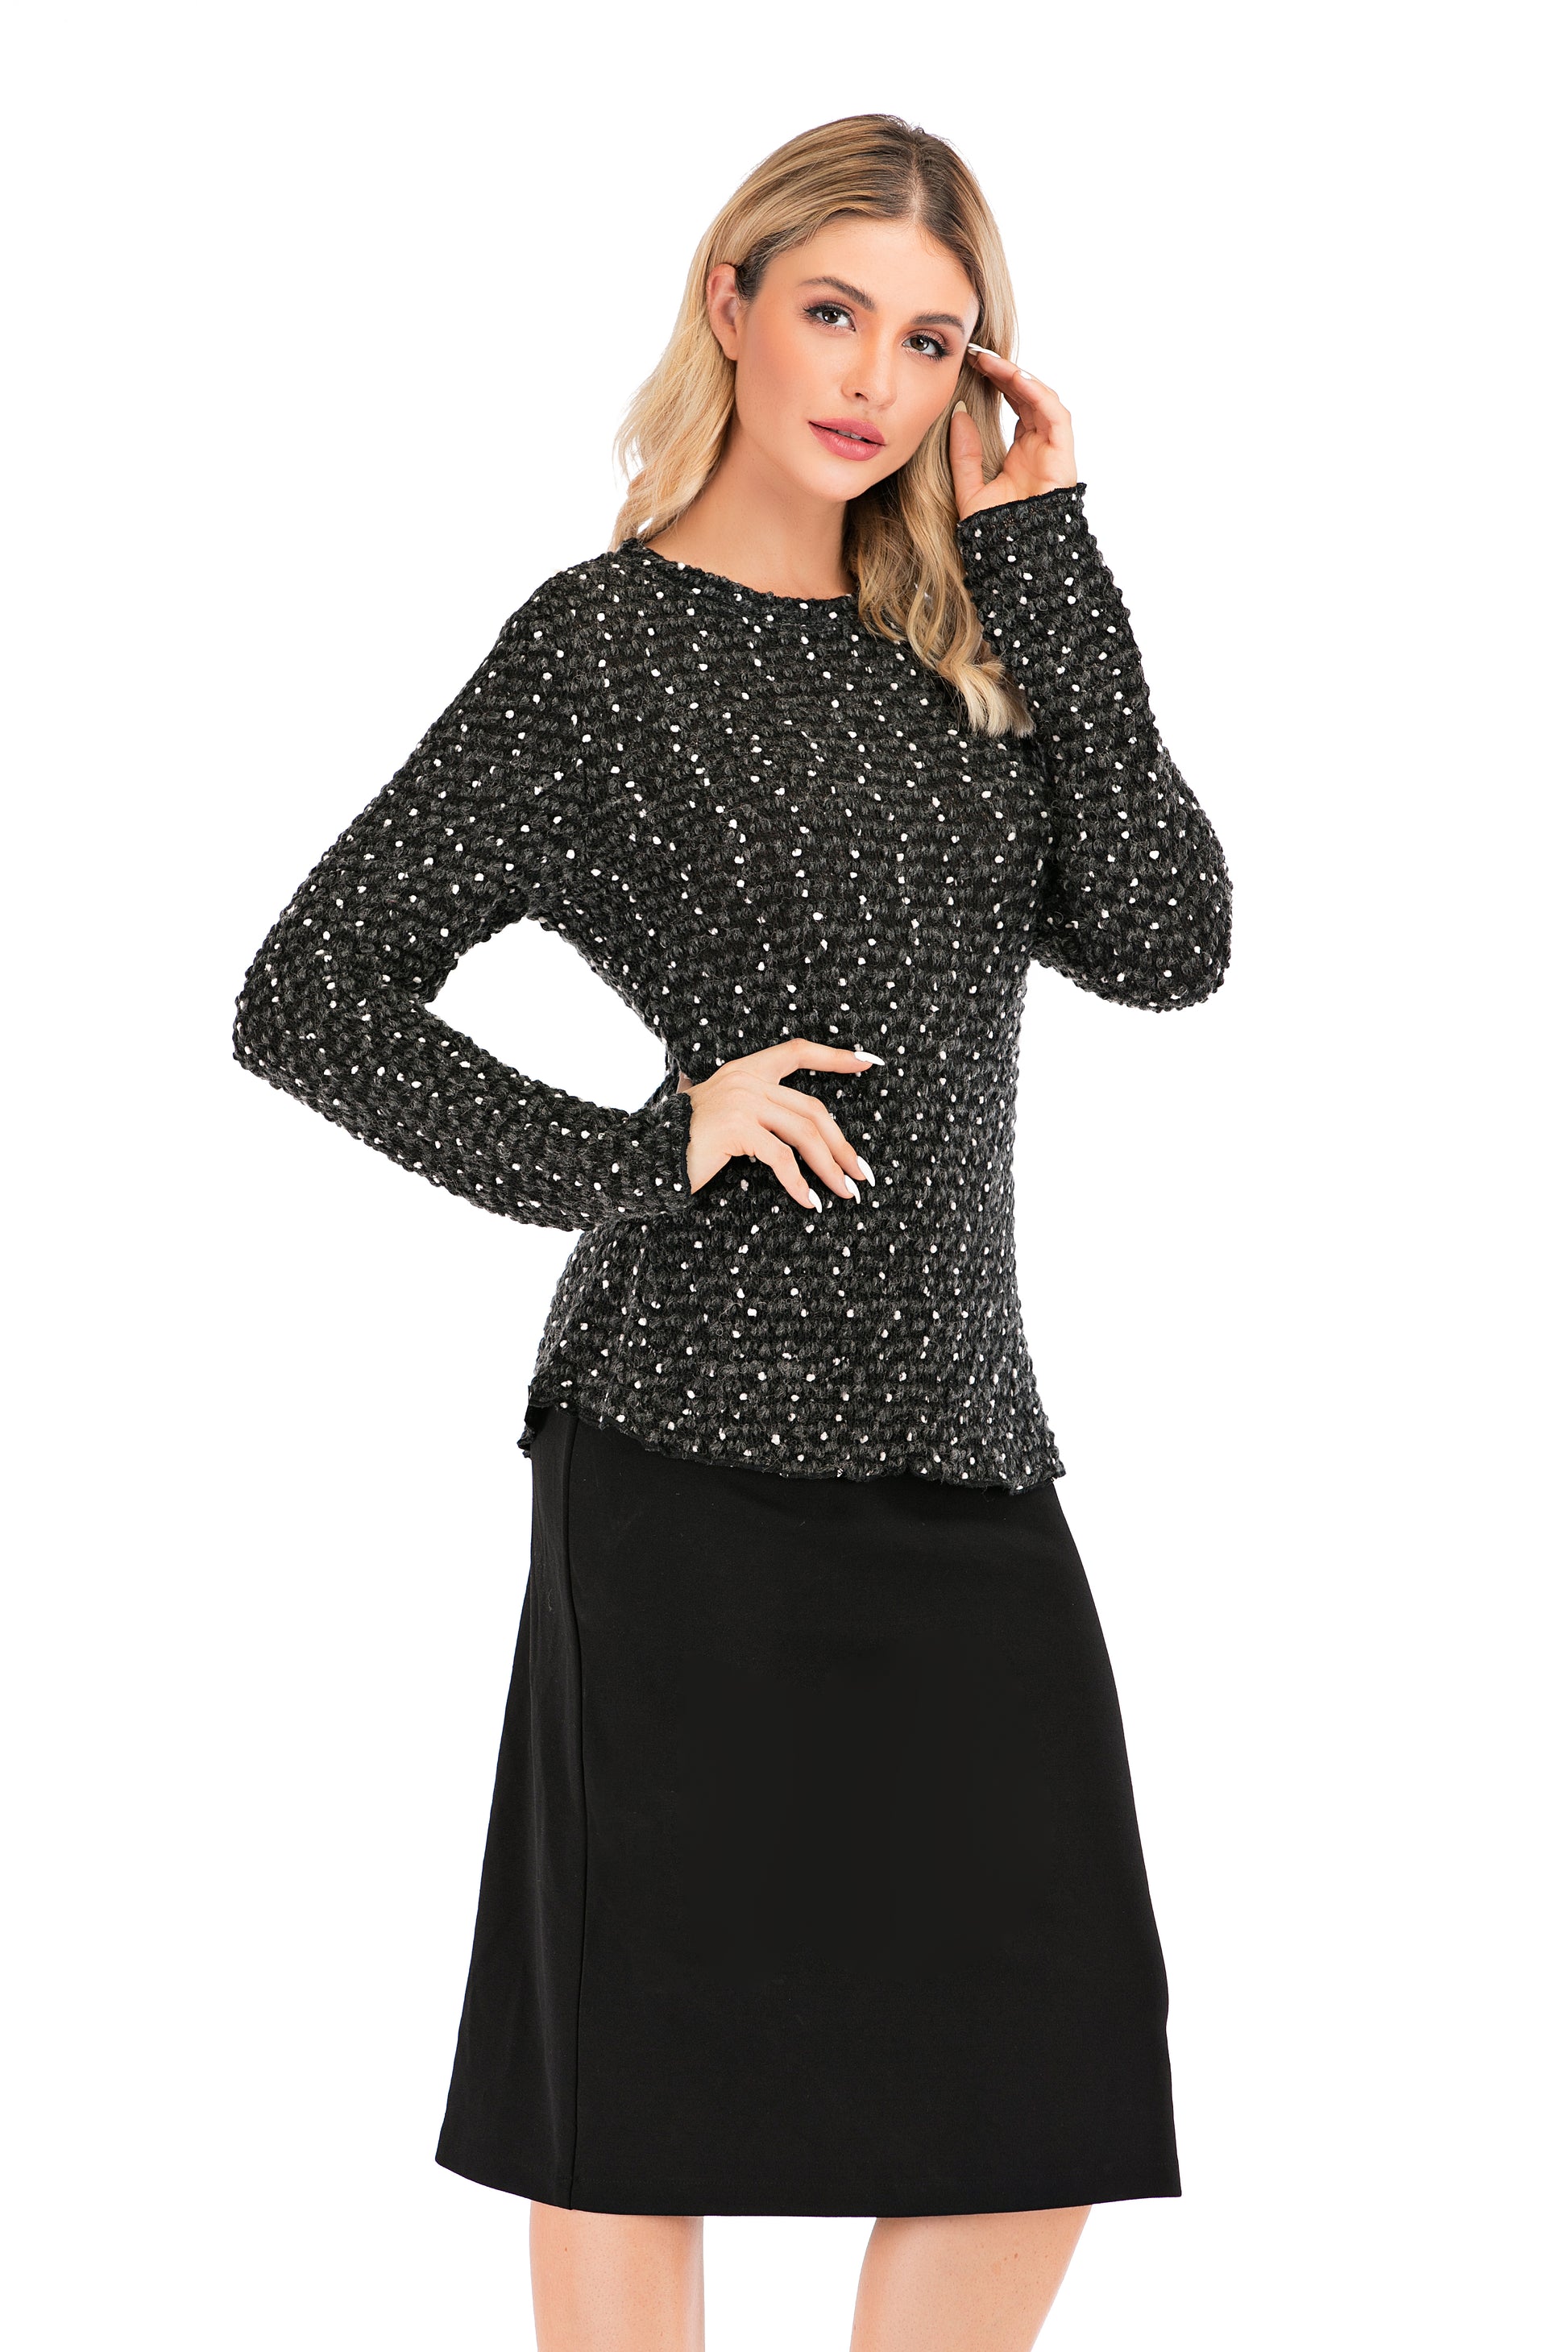 Elegant Black & White Long Sleeve Sweater - seilerlanguageservices